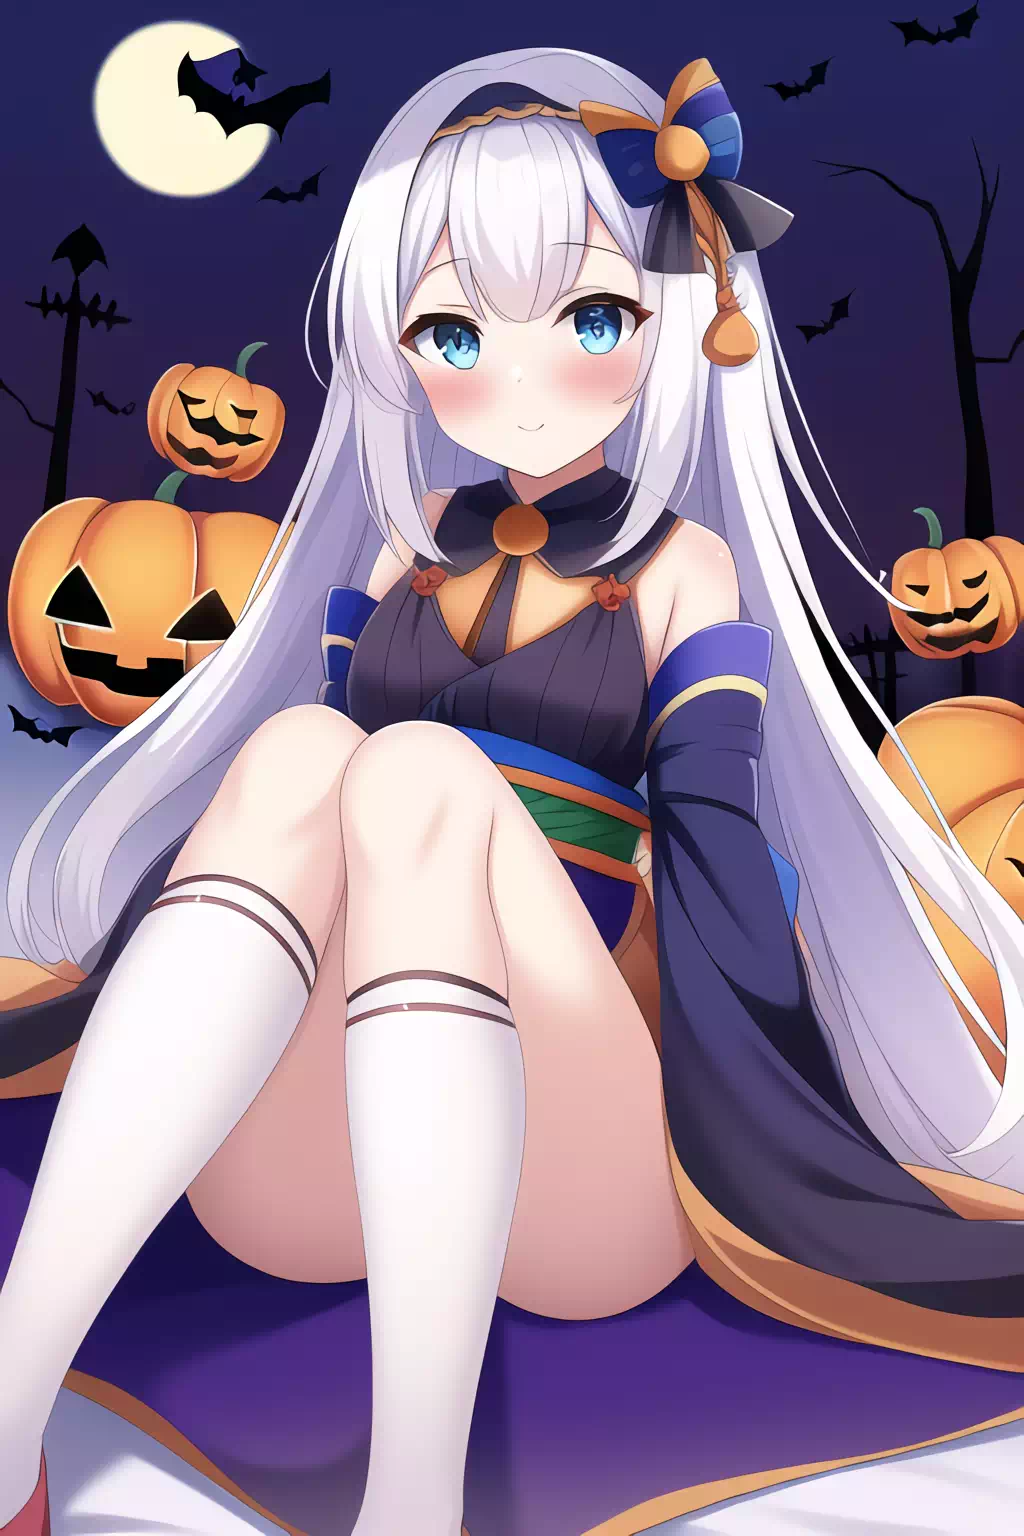 Loli white hair at Halloween